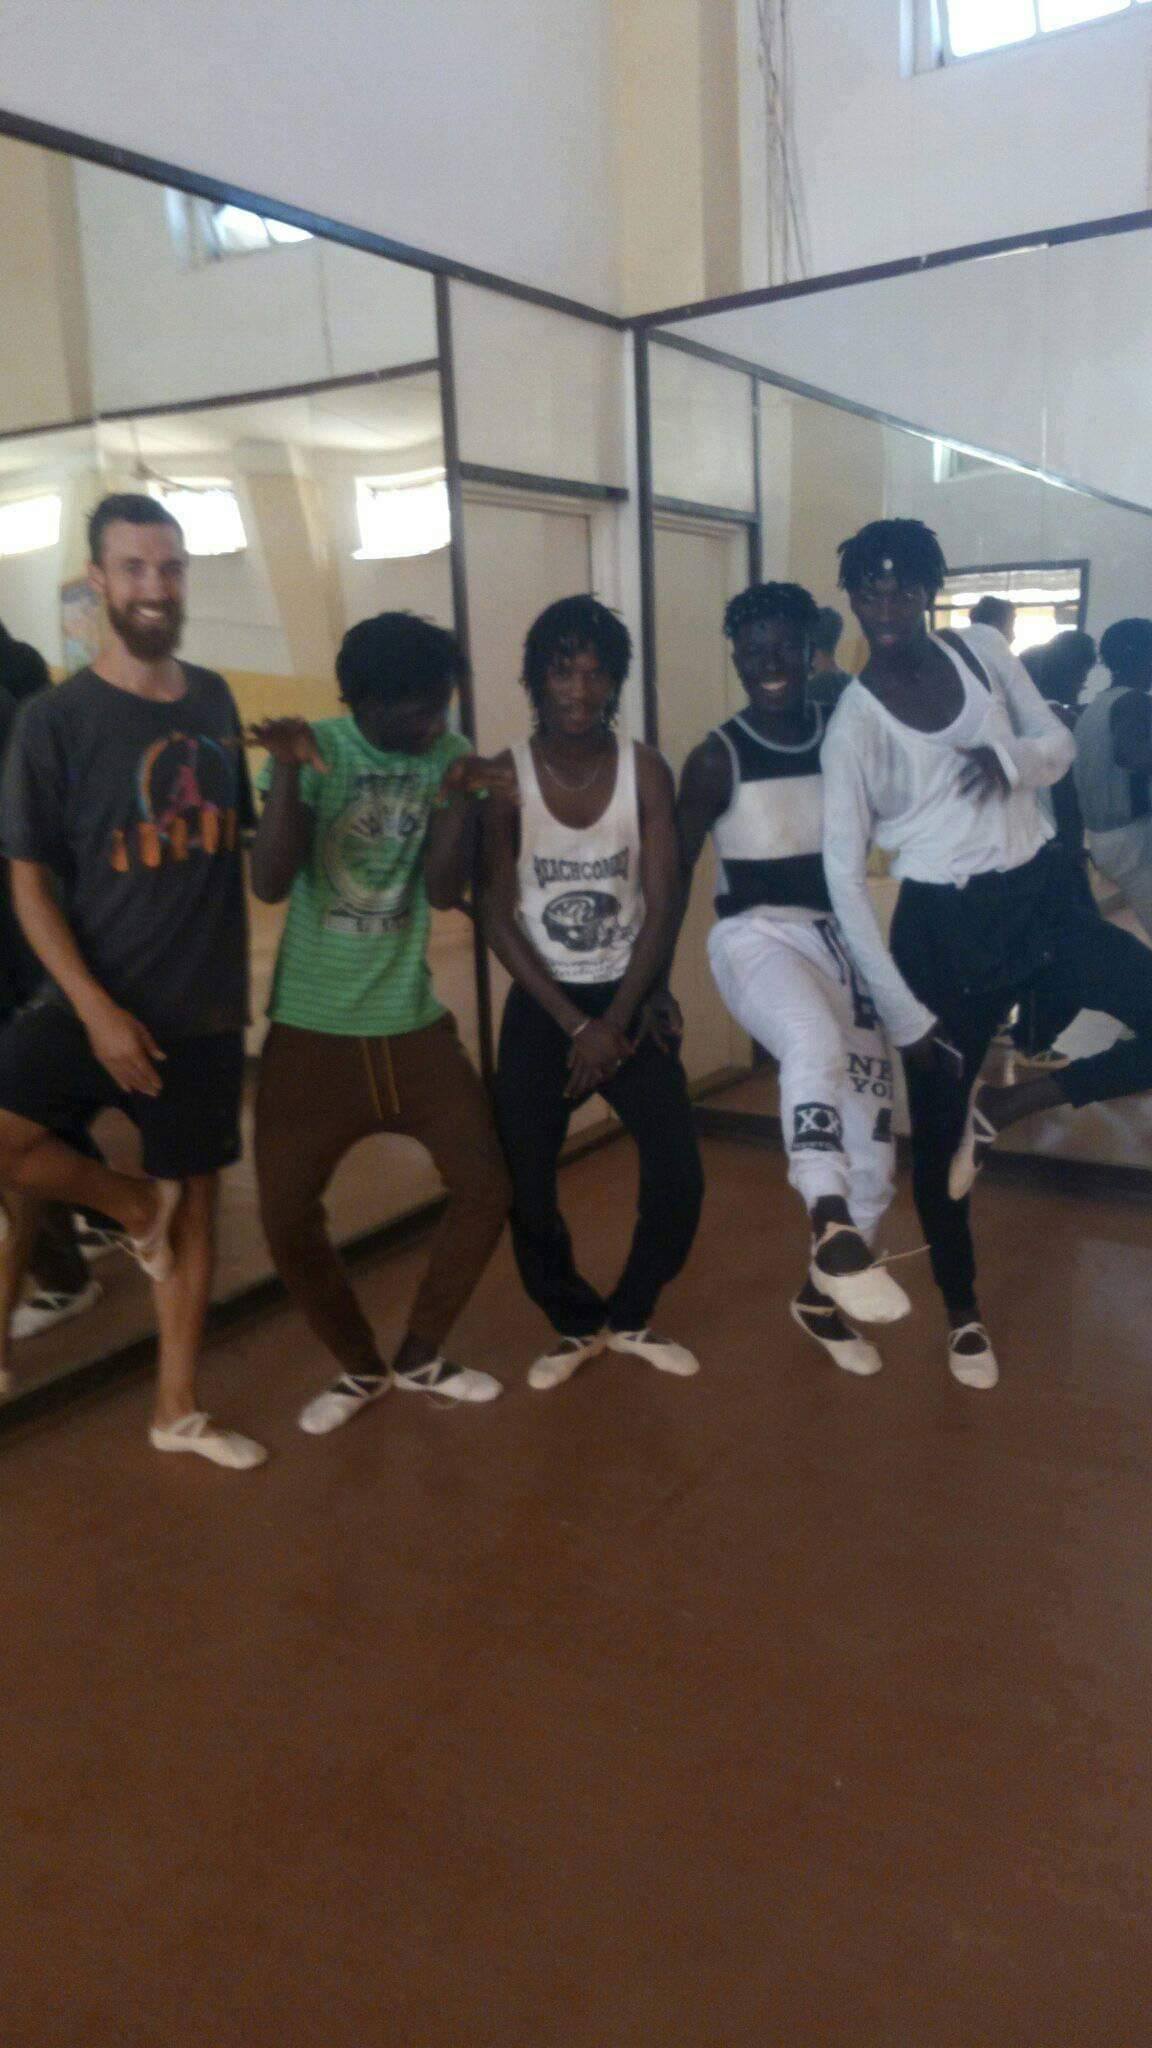 Gambia Ballet Factory